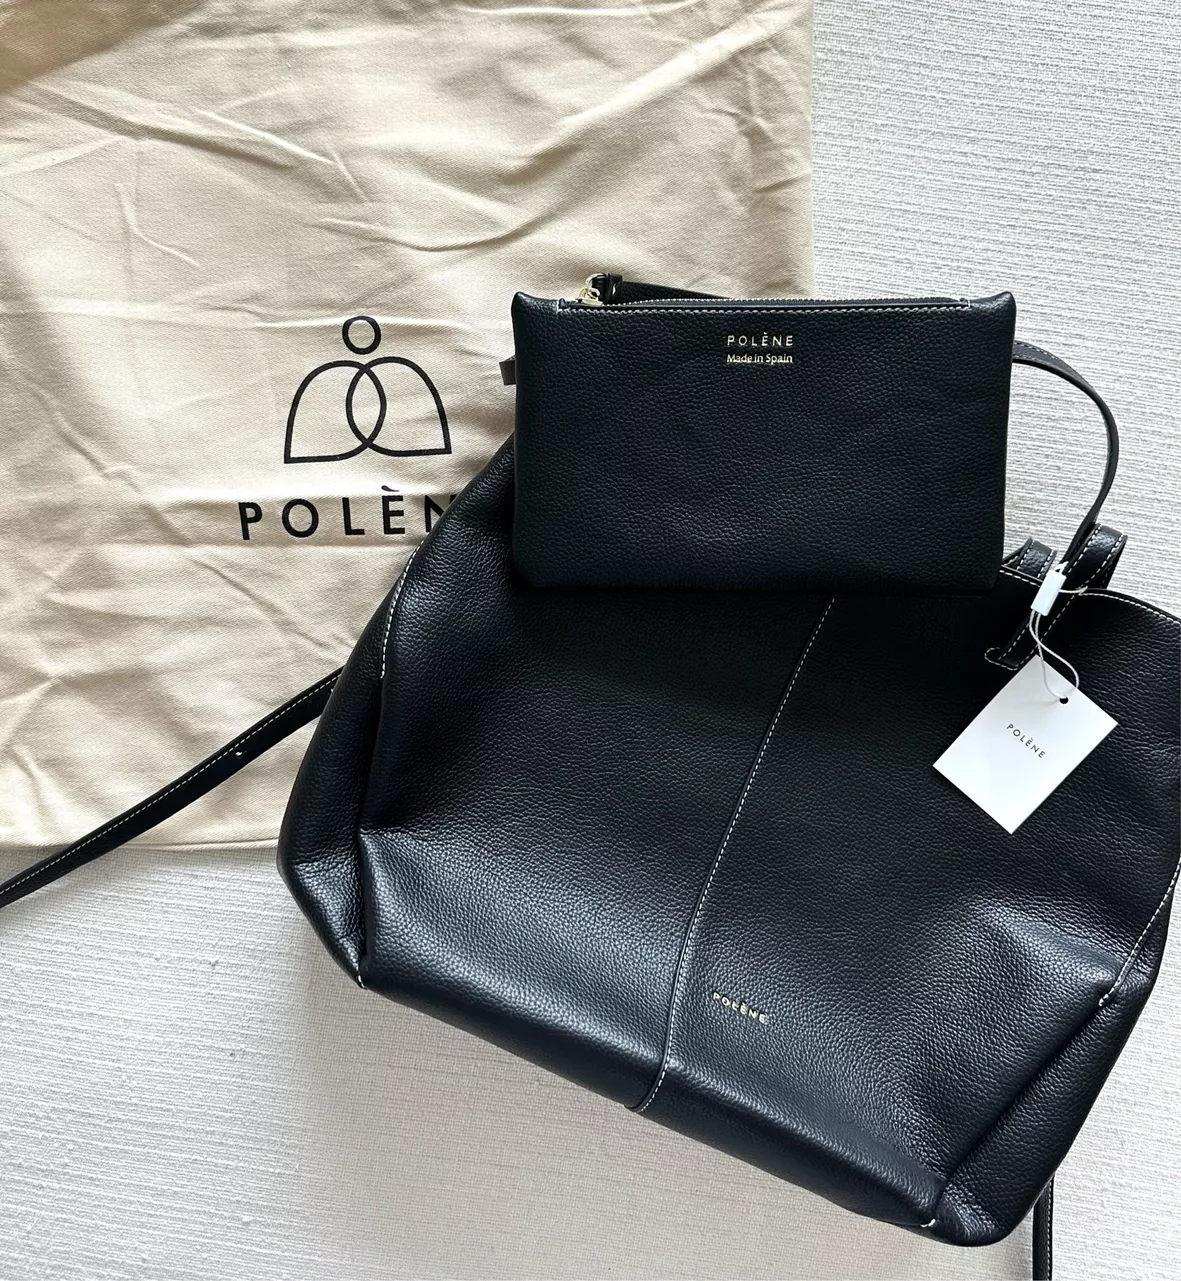 Saddle leather handbag Dior Navy … curated on LTK